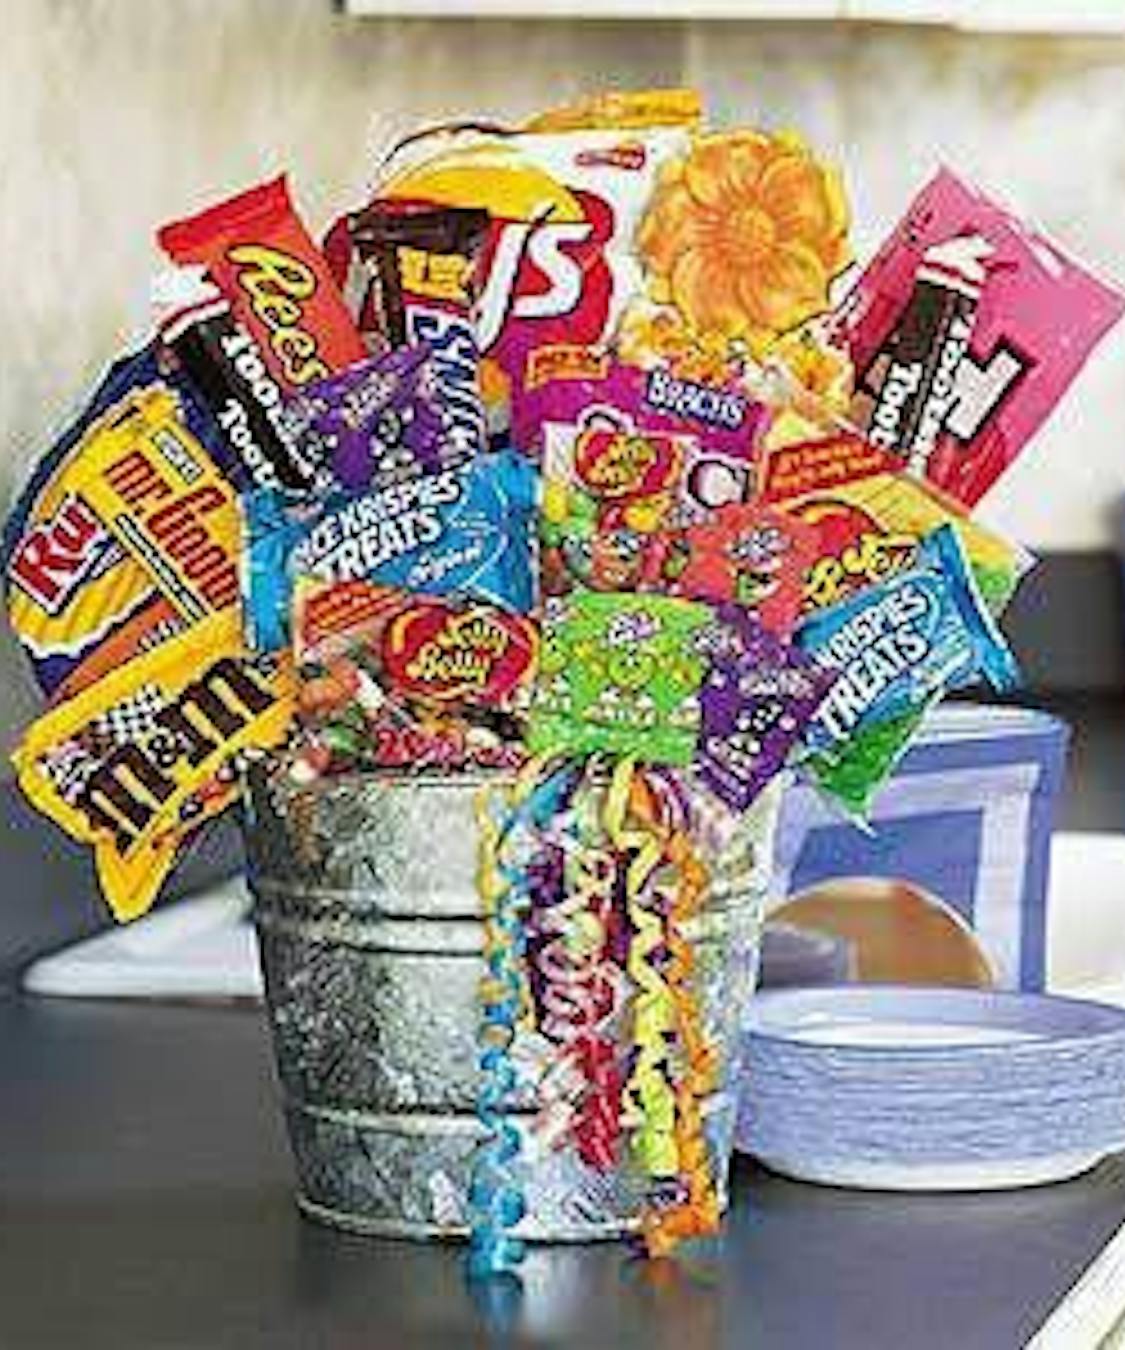 Junk Food Basket Hollywood FL Candy Gifts